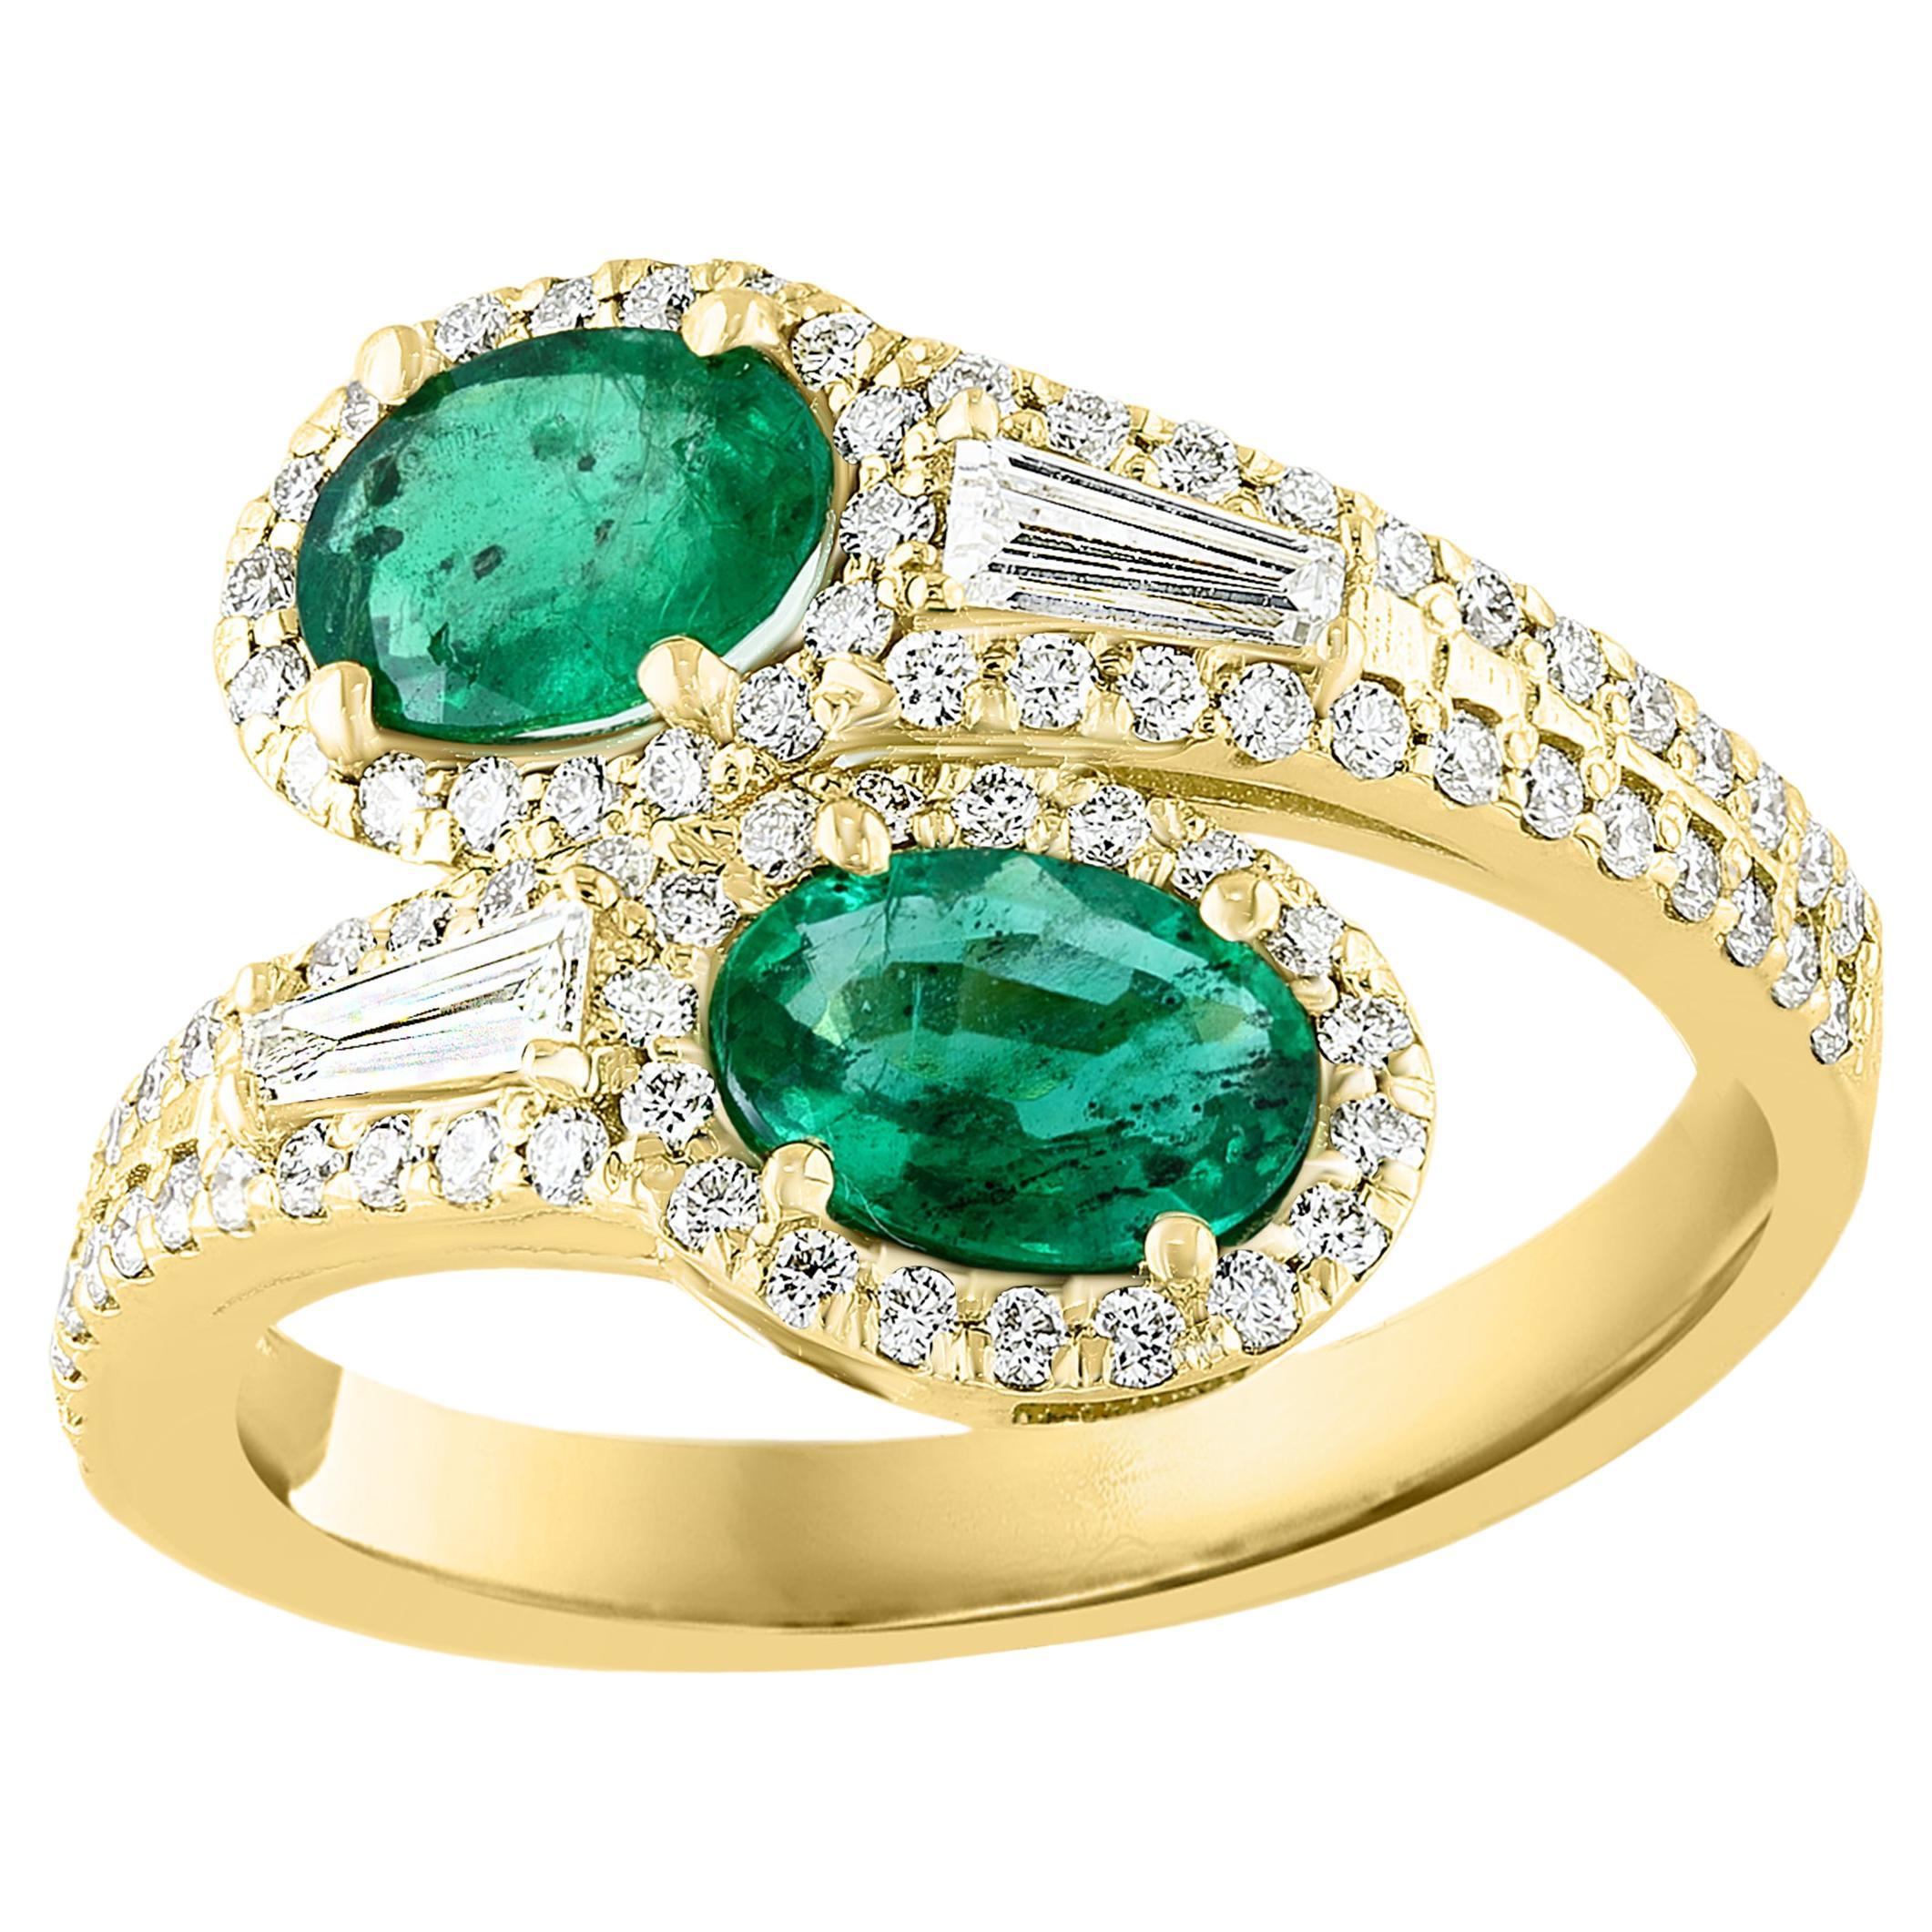 1.52 Carat Oval Cut Emerald Diamond Toi Et Moi Engagement Ring 14K Yellow Gold